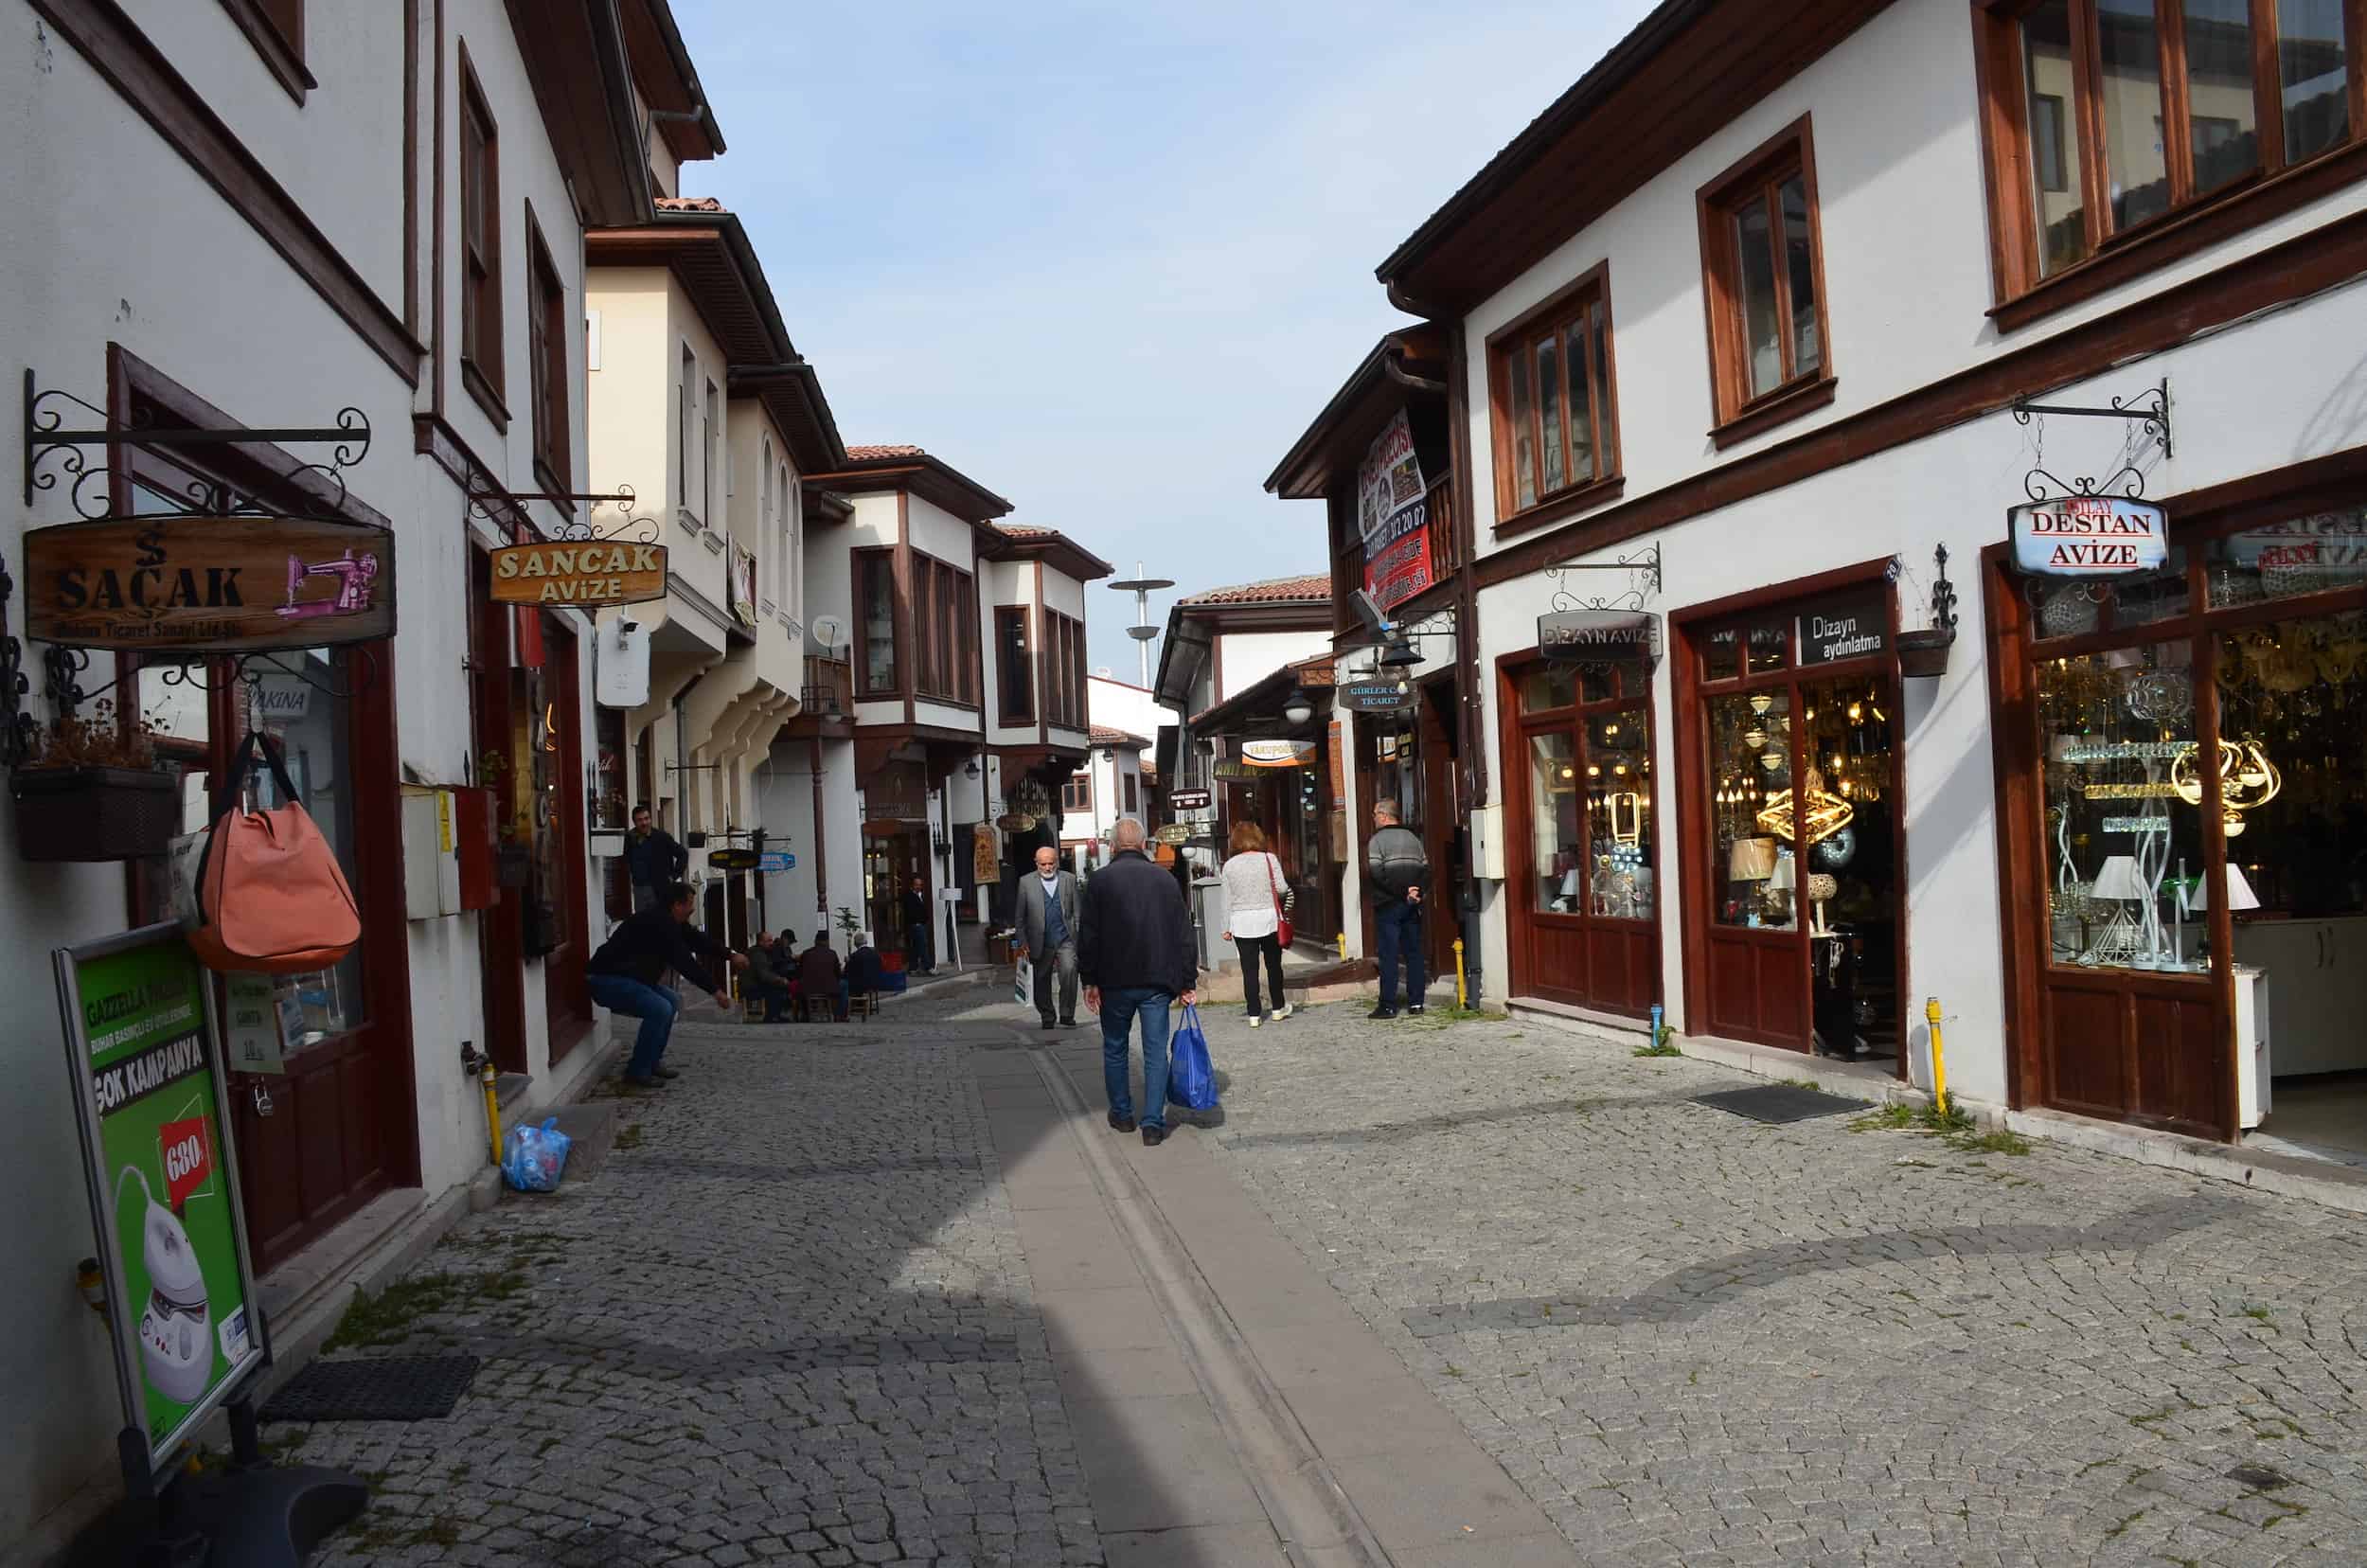 A street full of shops in Hacıbayram, Ulus, Ankara, Turkey